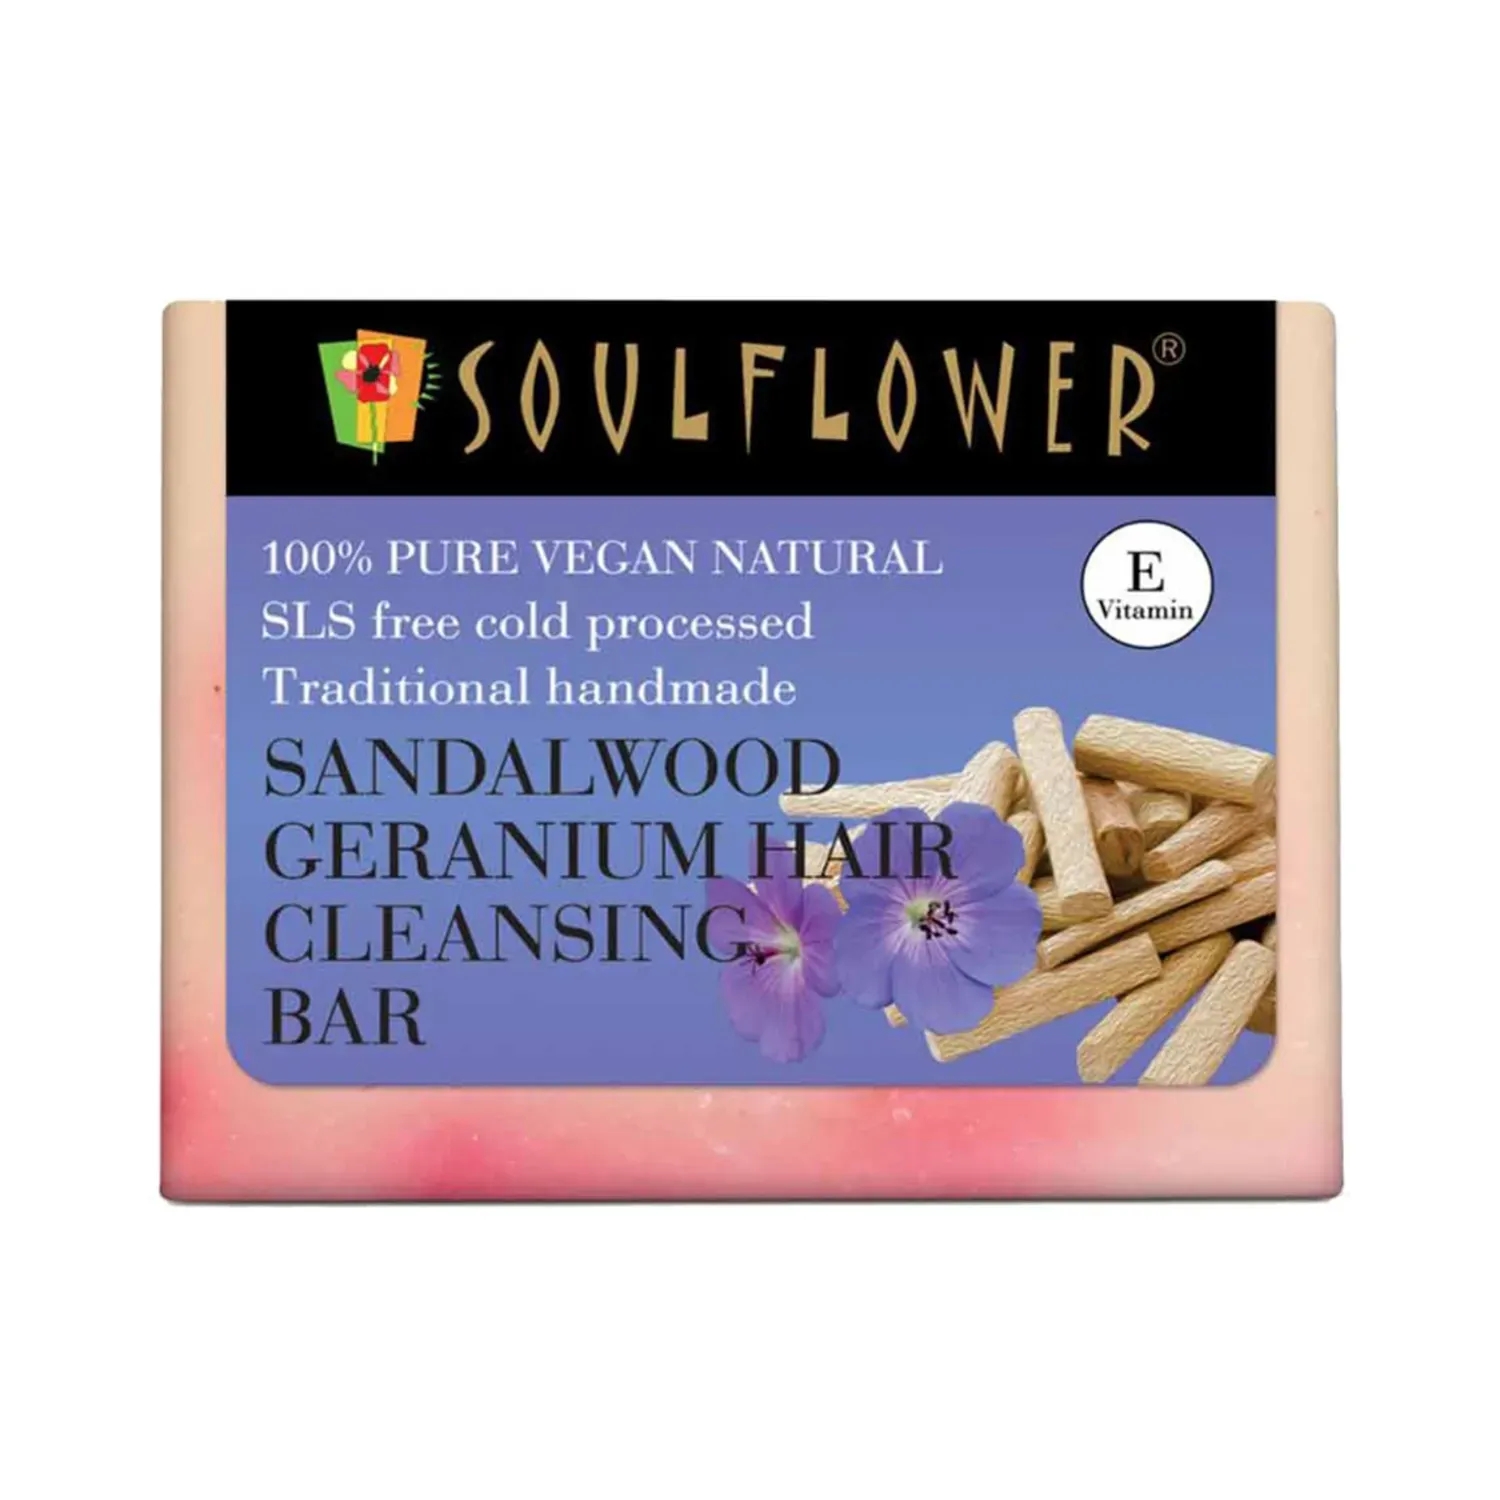 Soulflower Sandalwood Geranium Hair Cleansing Bar Soap - (150g)